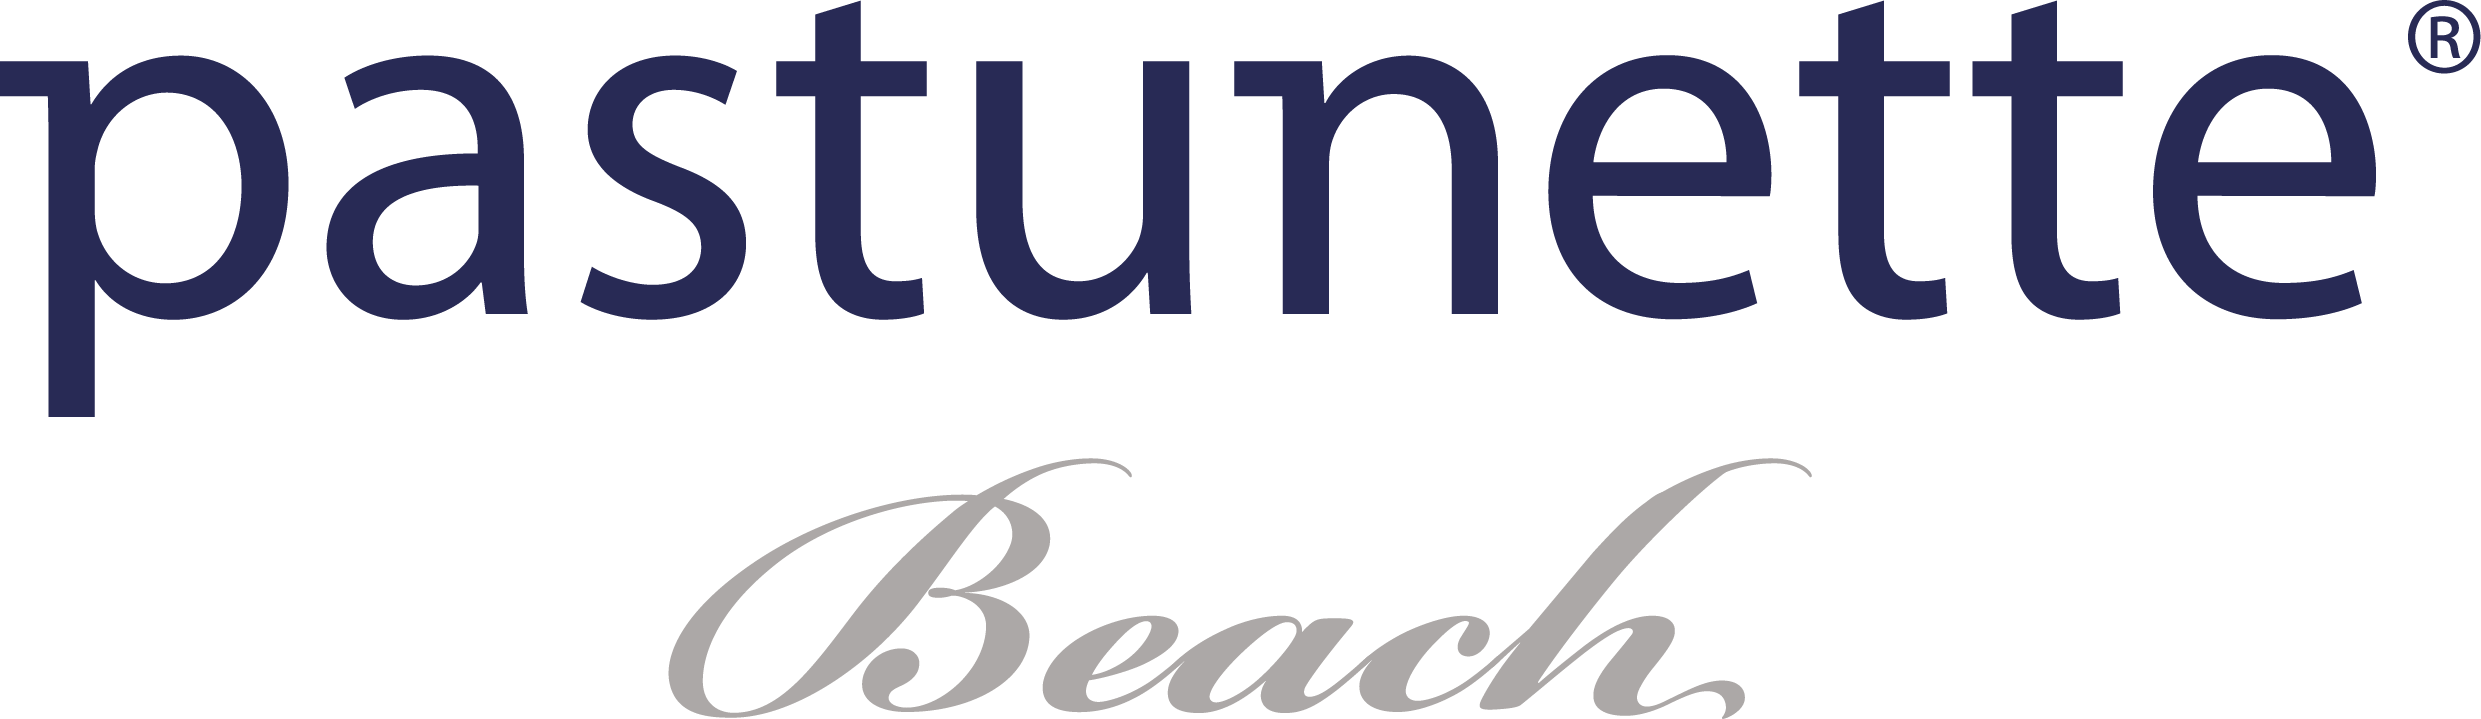 Pastunette Beach logo